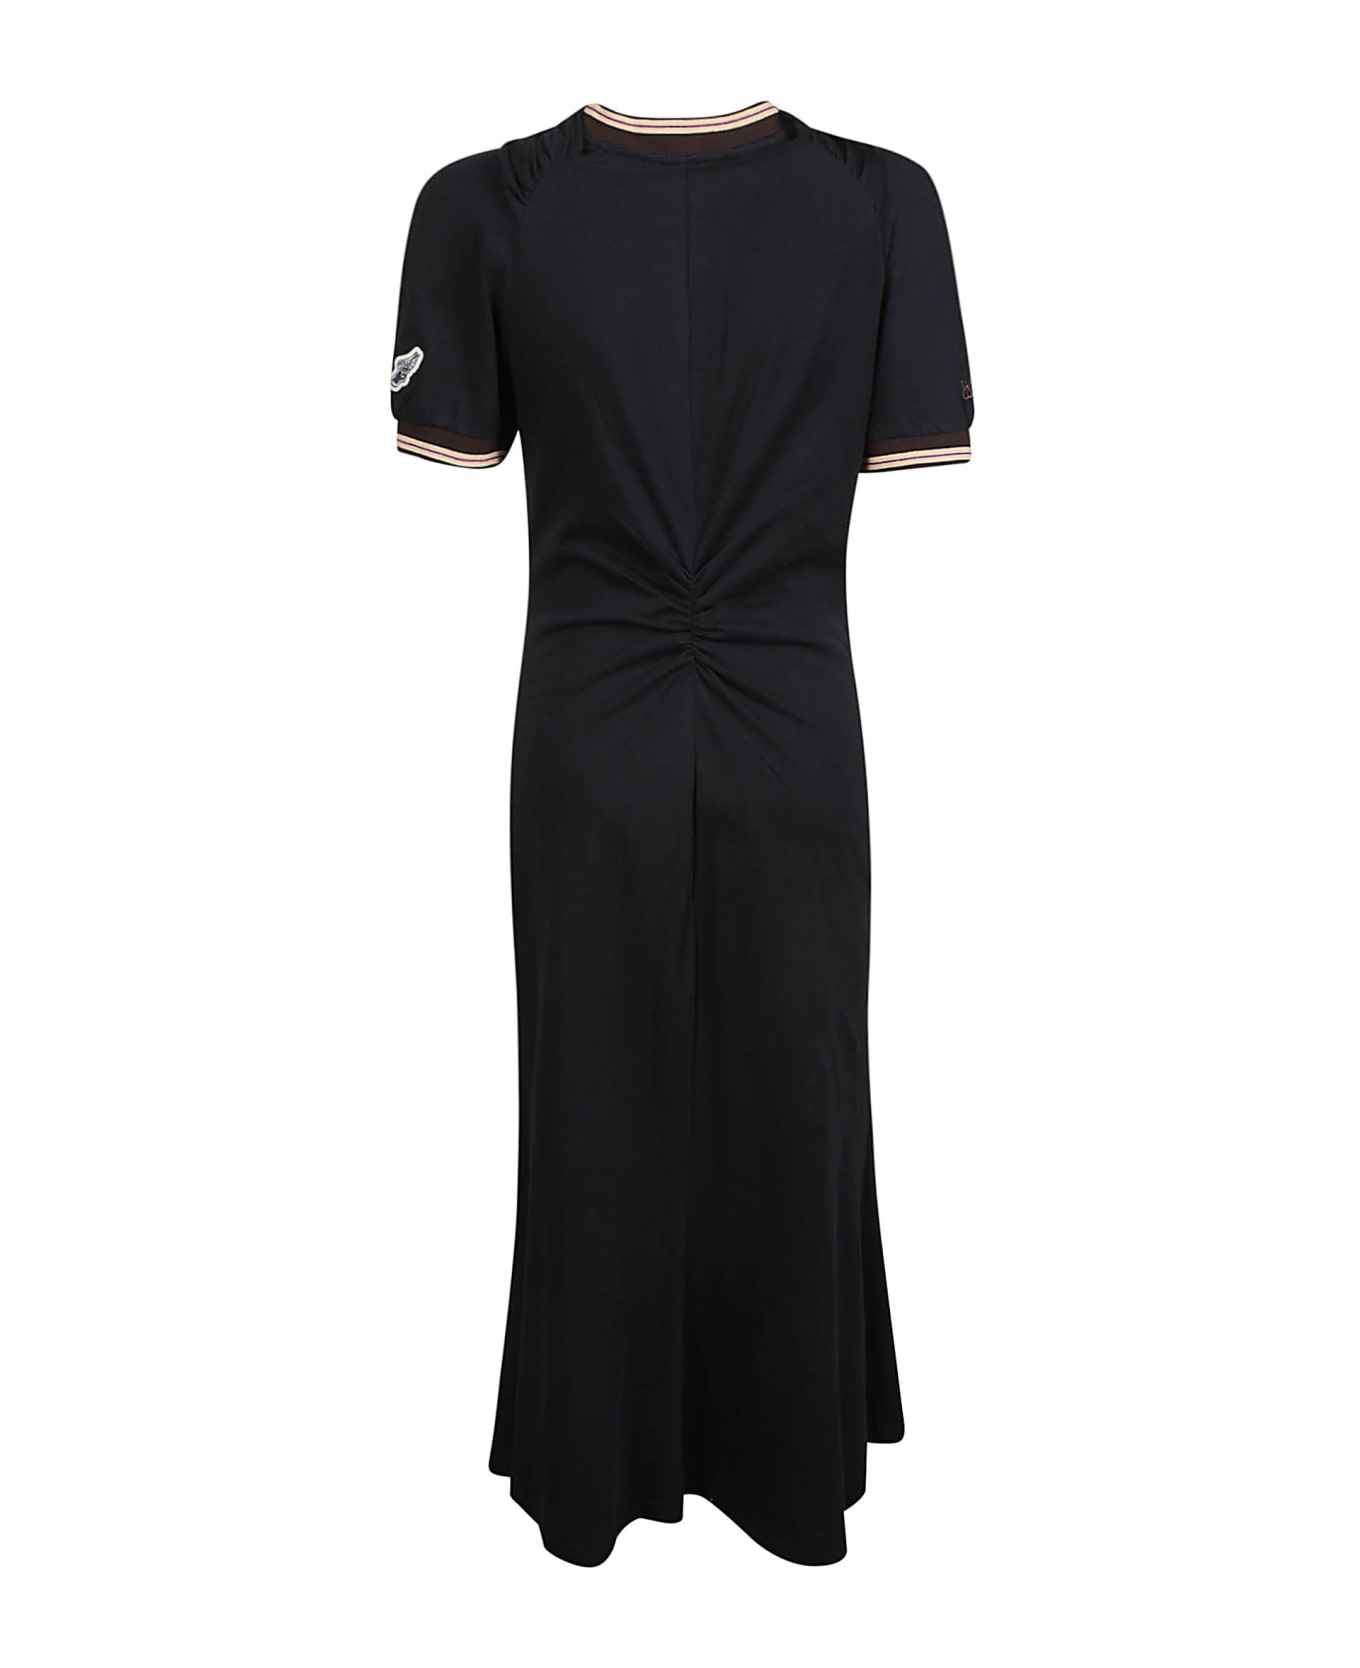 Wales Bonner Plain T-shirt Wing Dress - Black